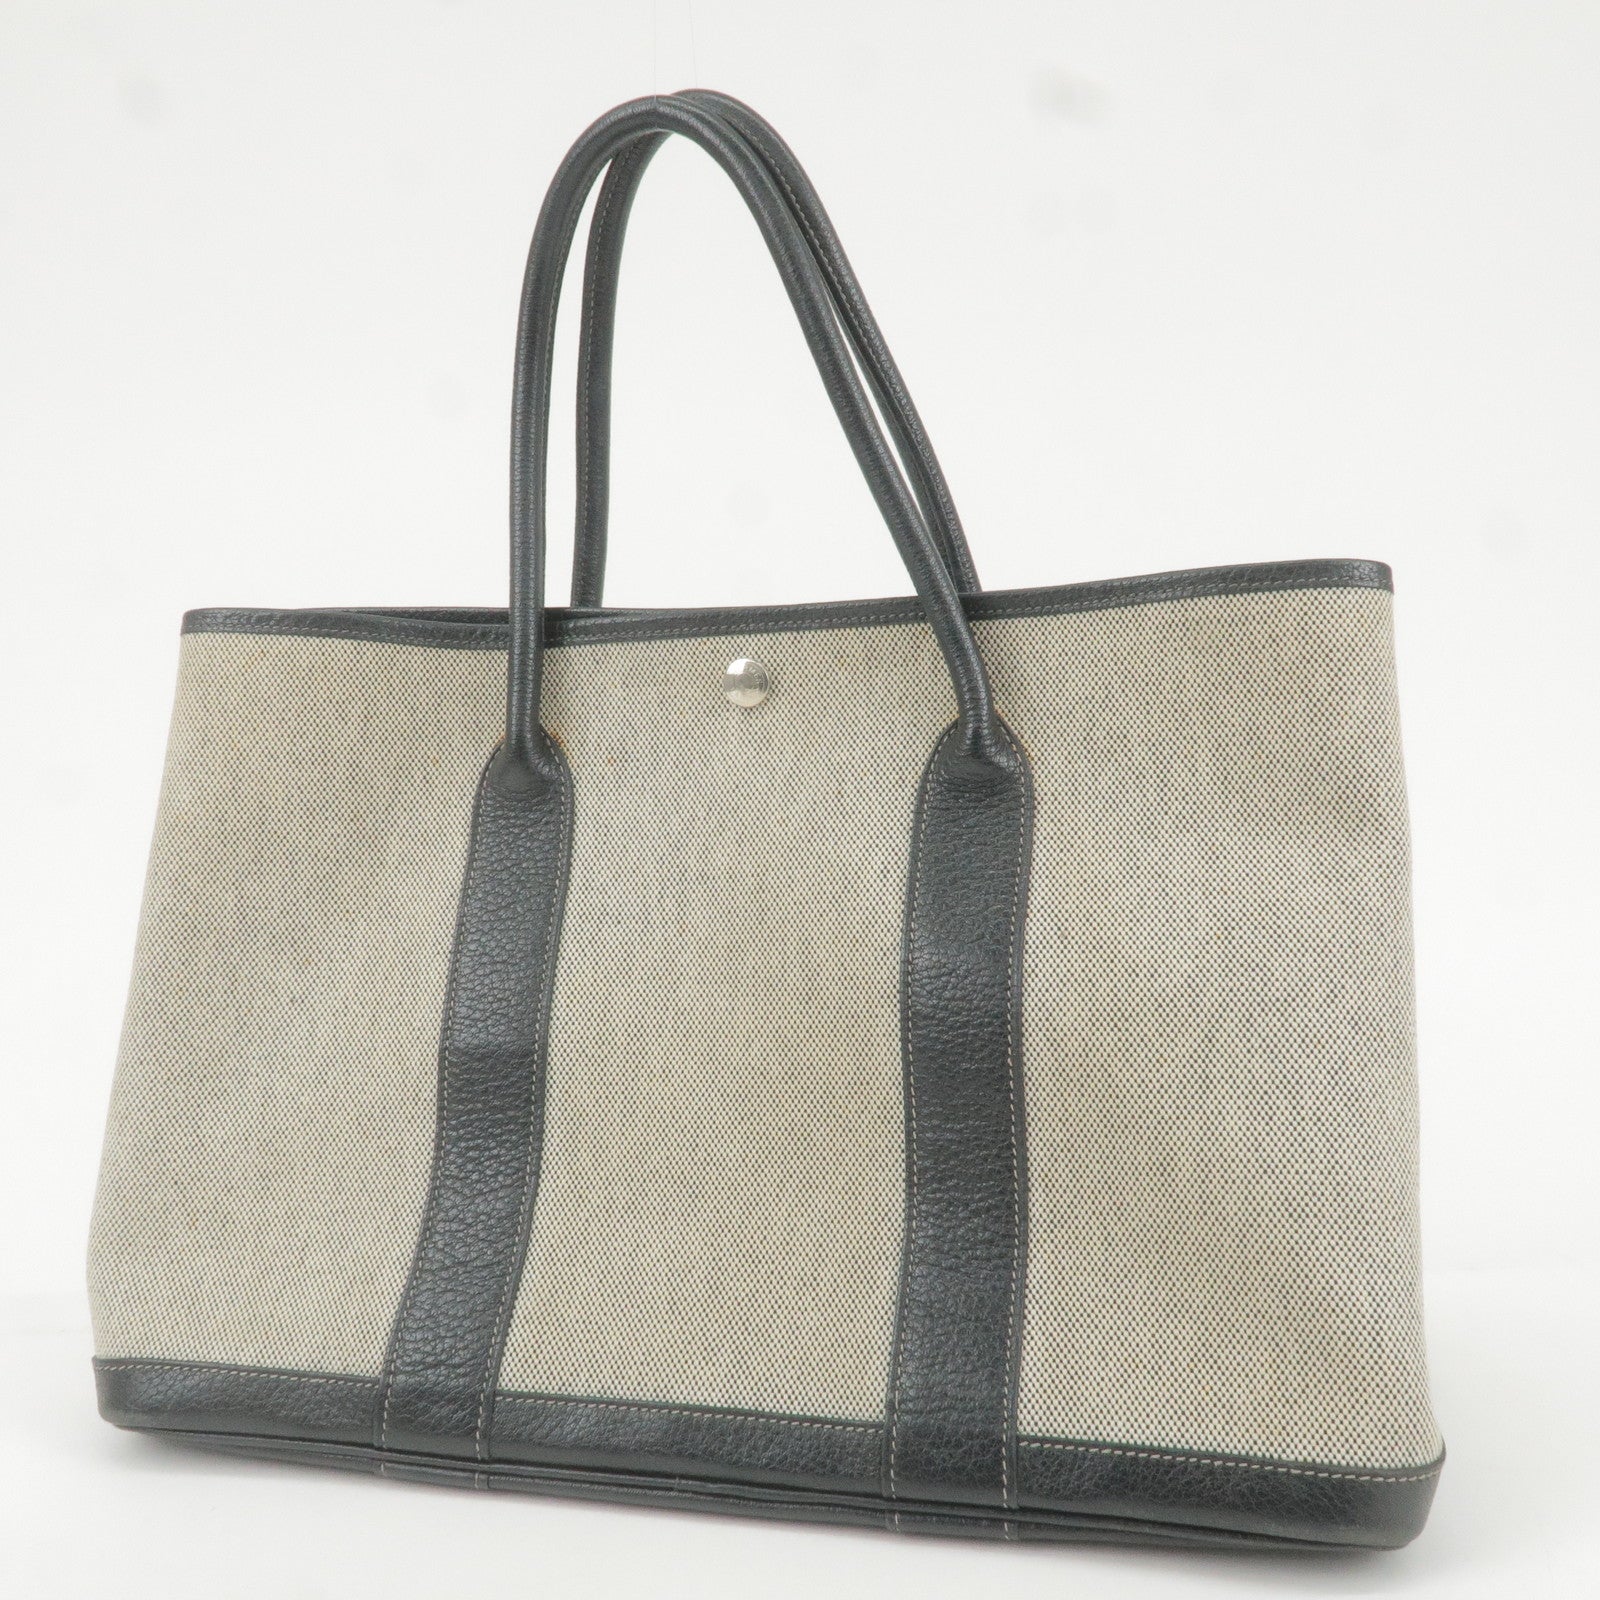 Garden - Gray - Bag - Toile - PM - Sac de voyage Hermes Bolide Travel Bag  en cuir Swift gris - HERMES - Leather - Ash - Party - ep_vintage luxury  Store - Tote - Black – dct